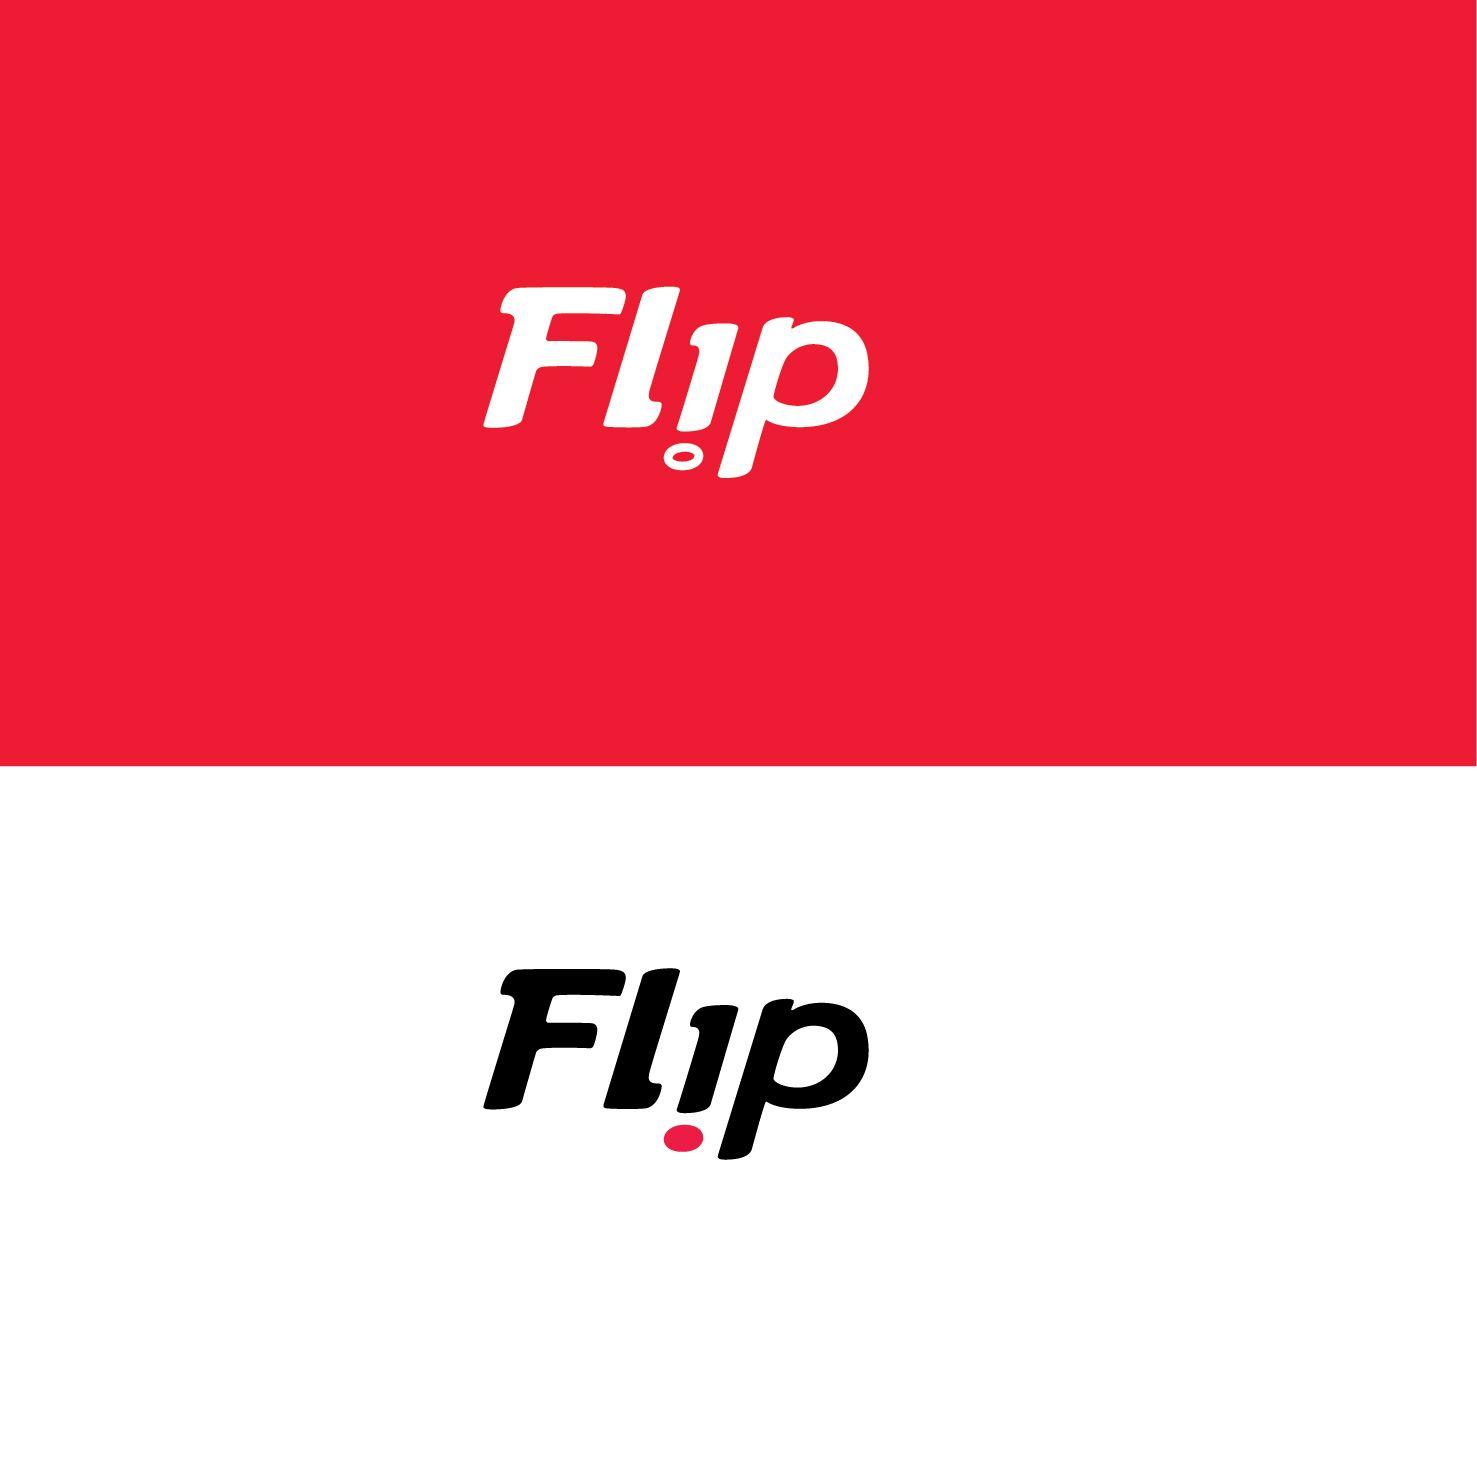 Flip Logo - Winning logo design for new company brand Flip mobile shop stores